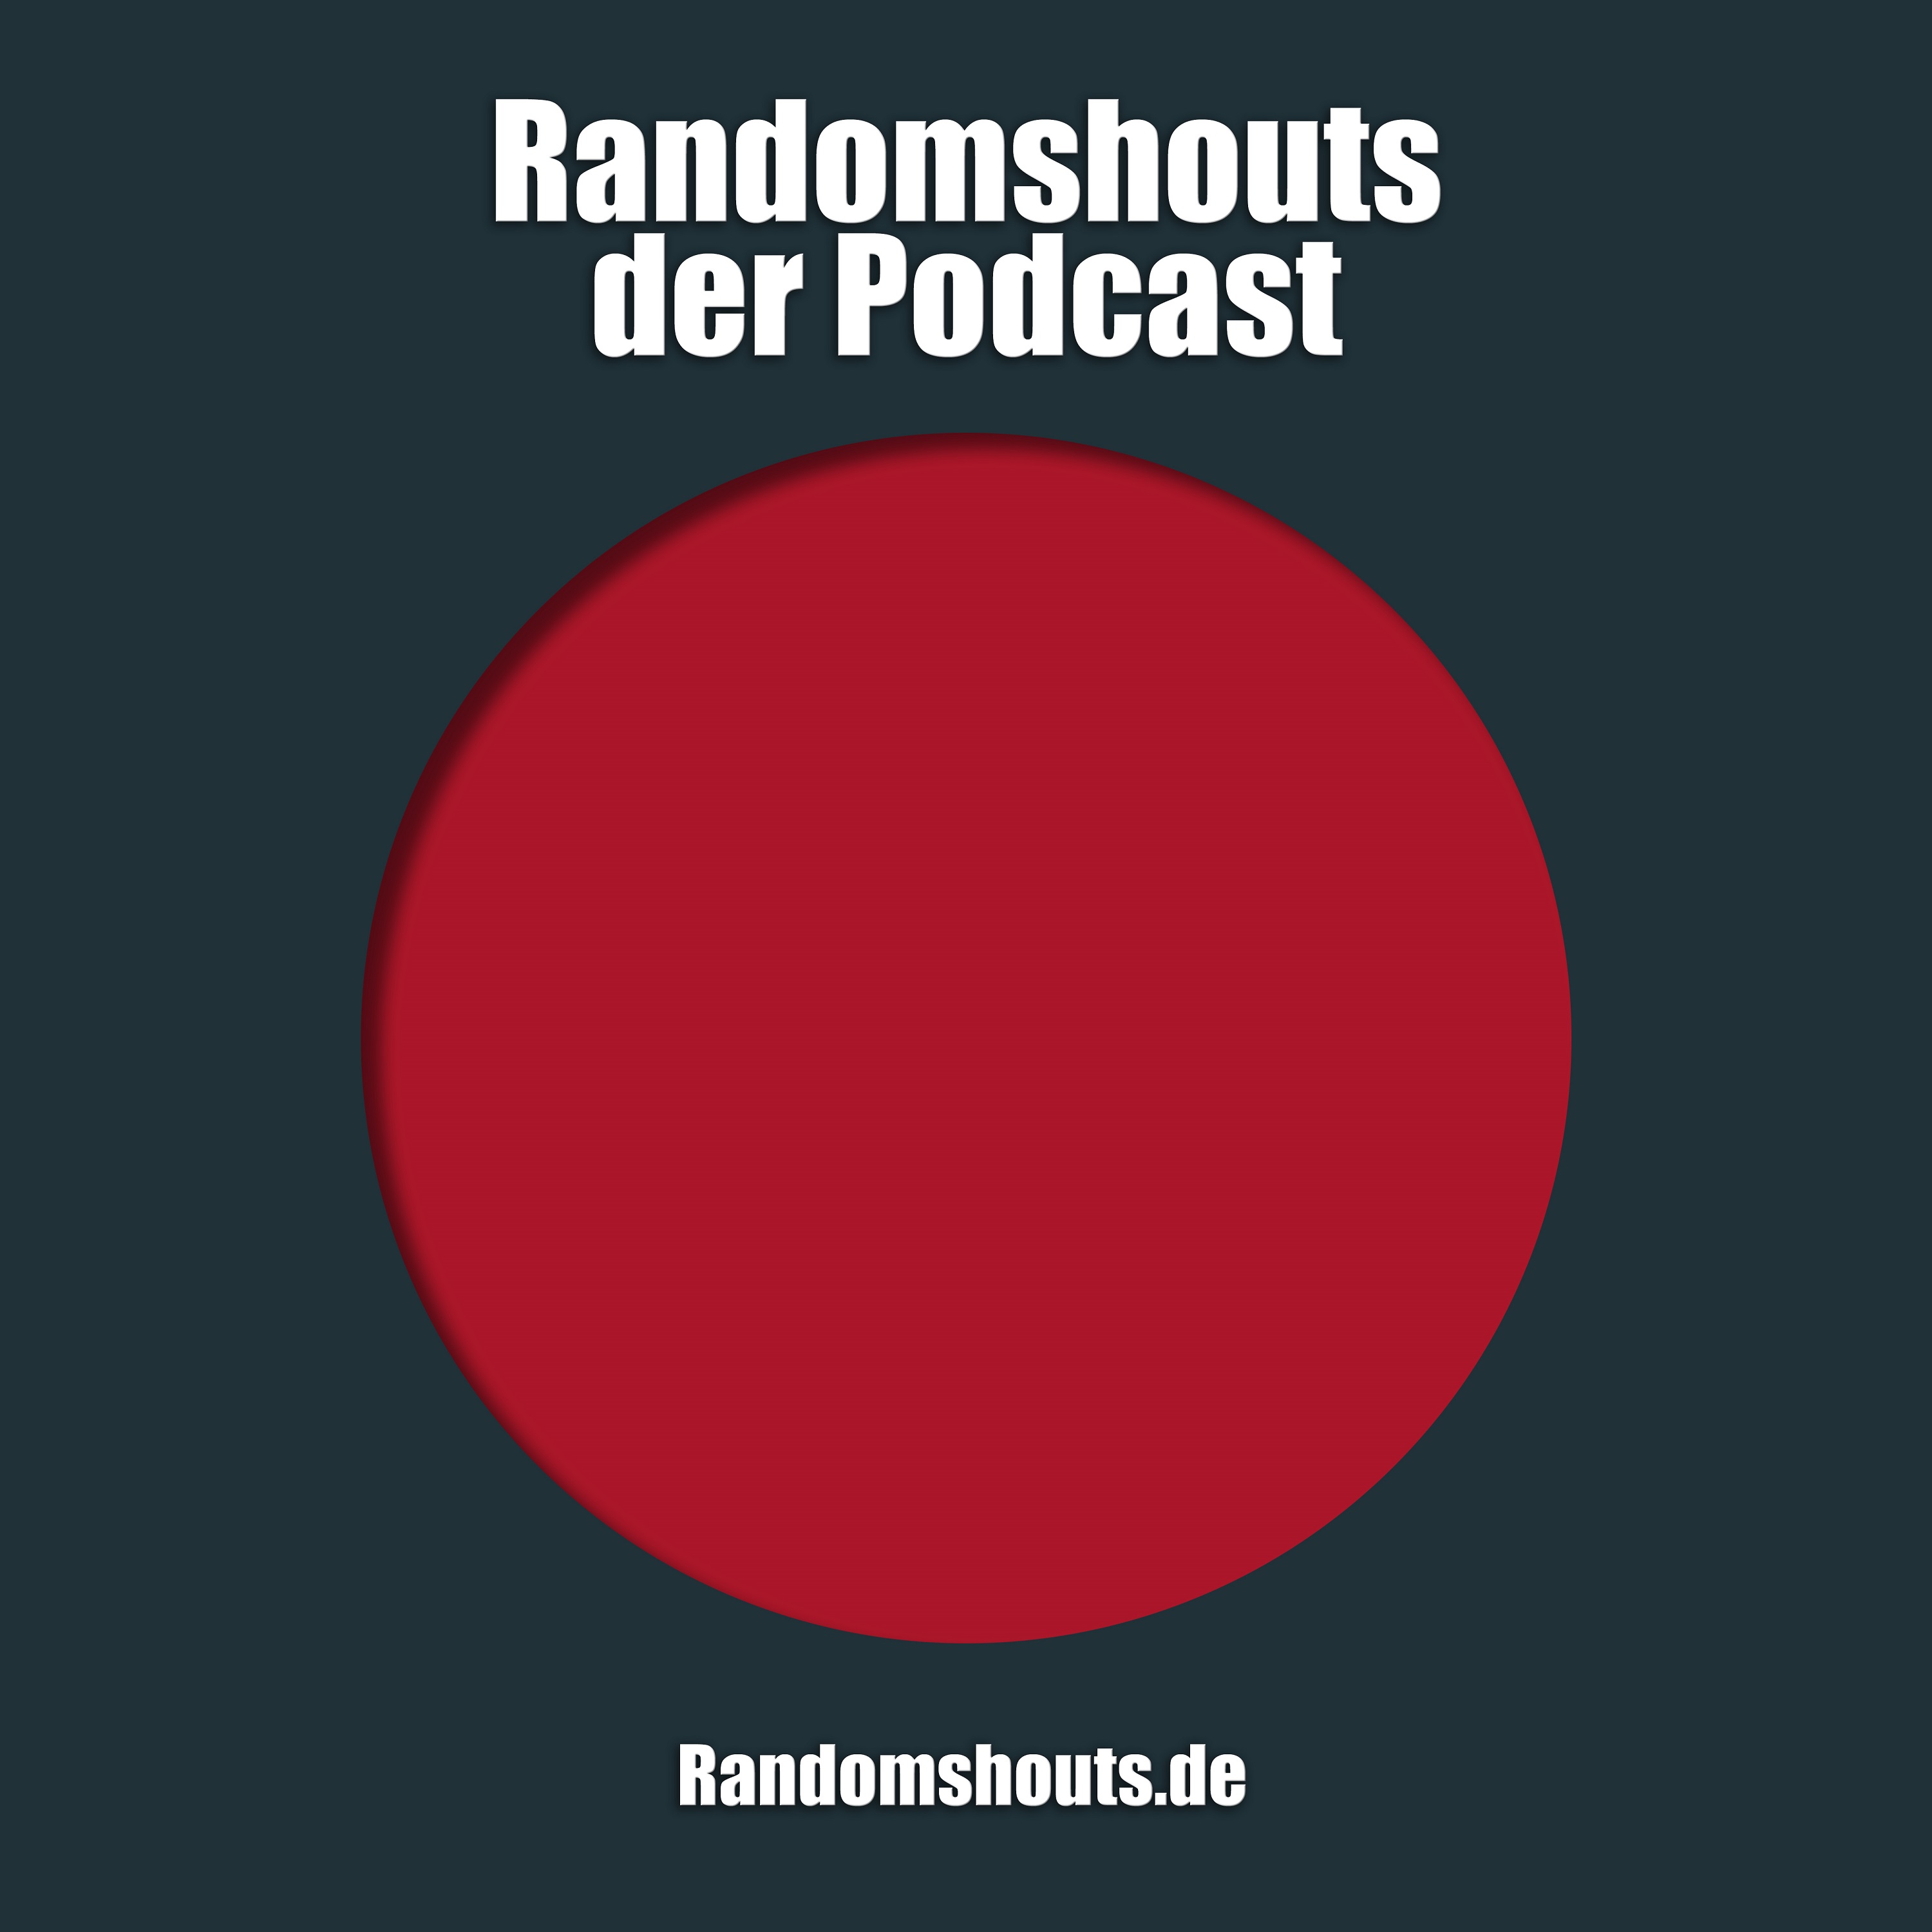 Randomshouts der Podcast - Episode 17: Der mit Mindestabstand beste Titel